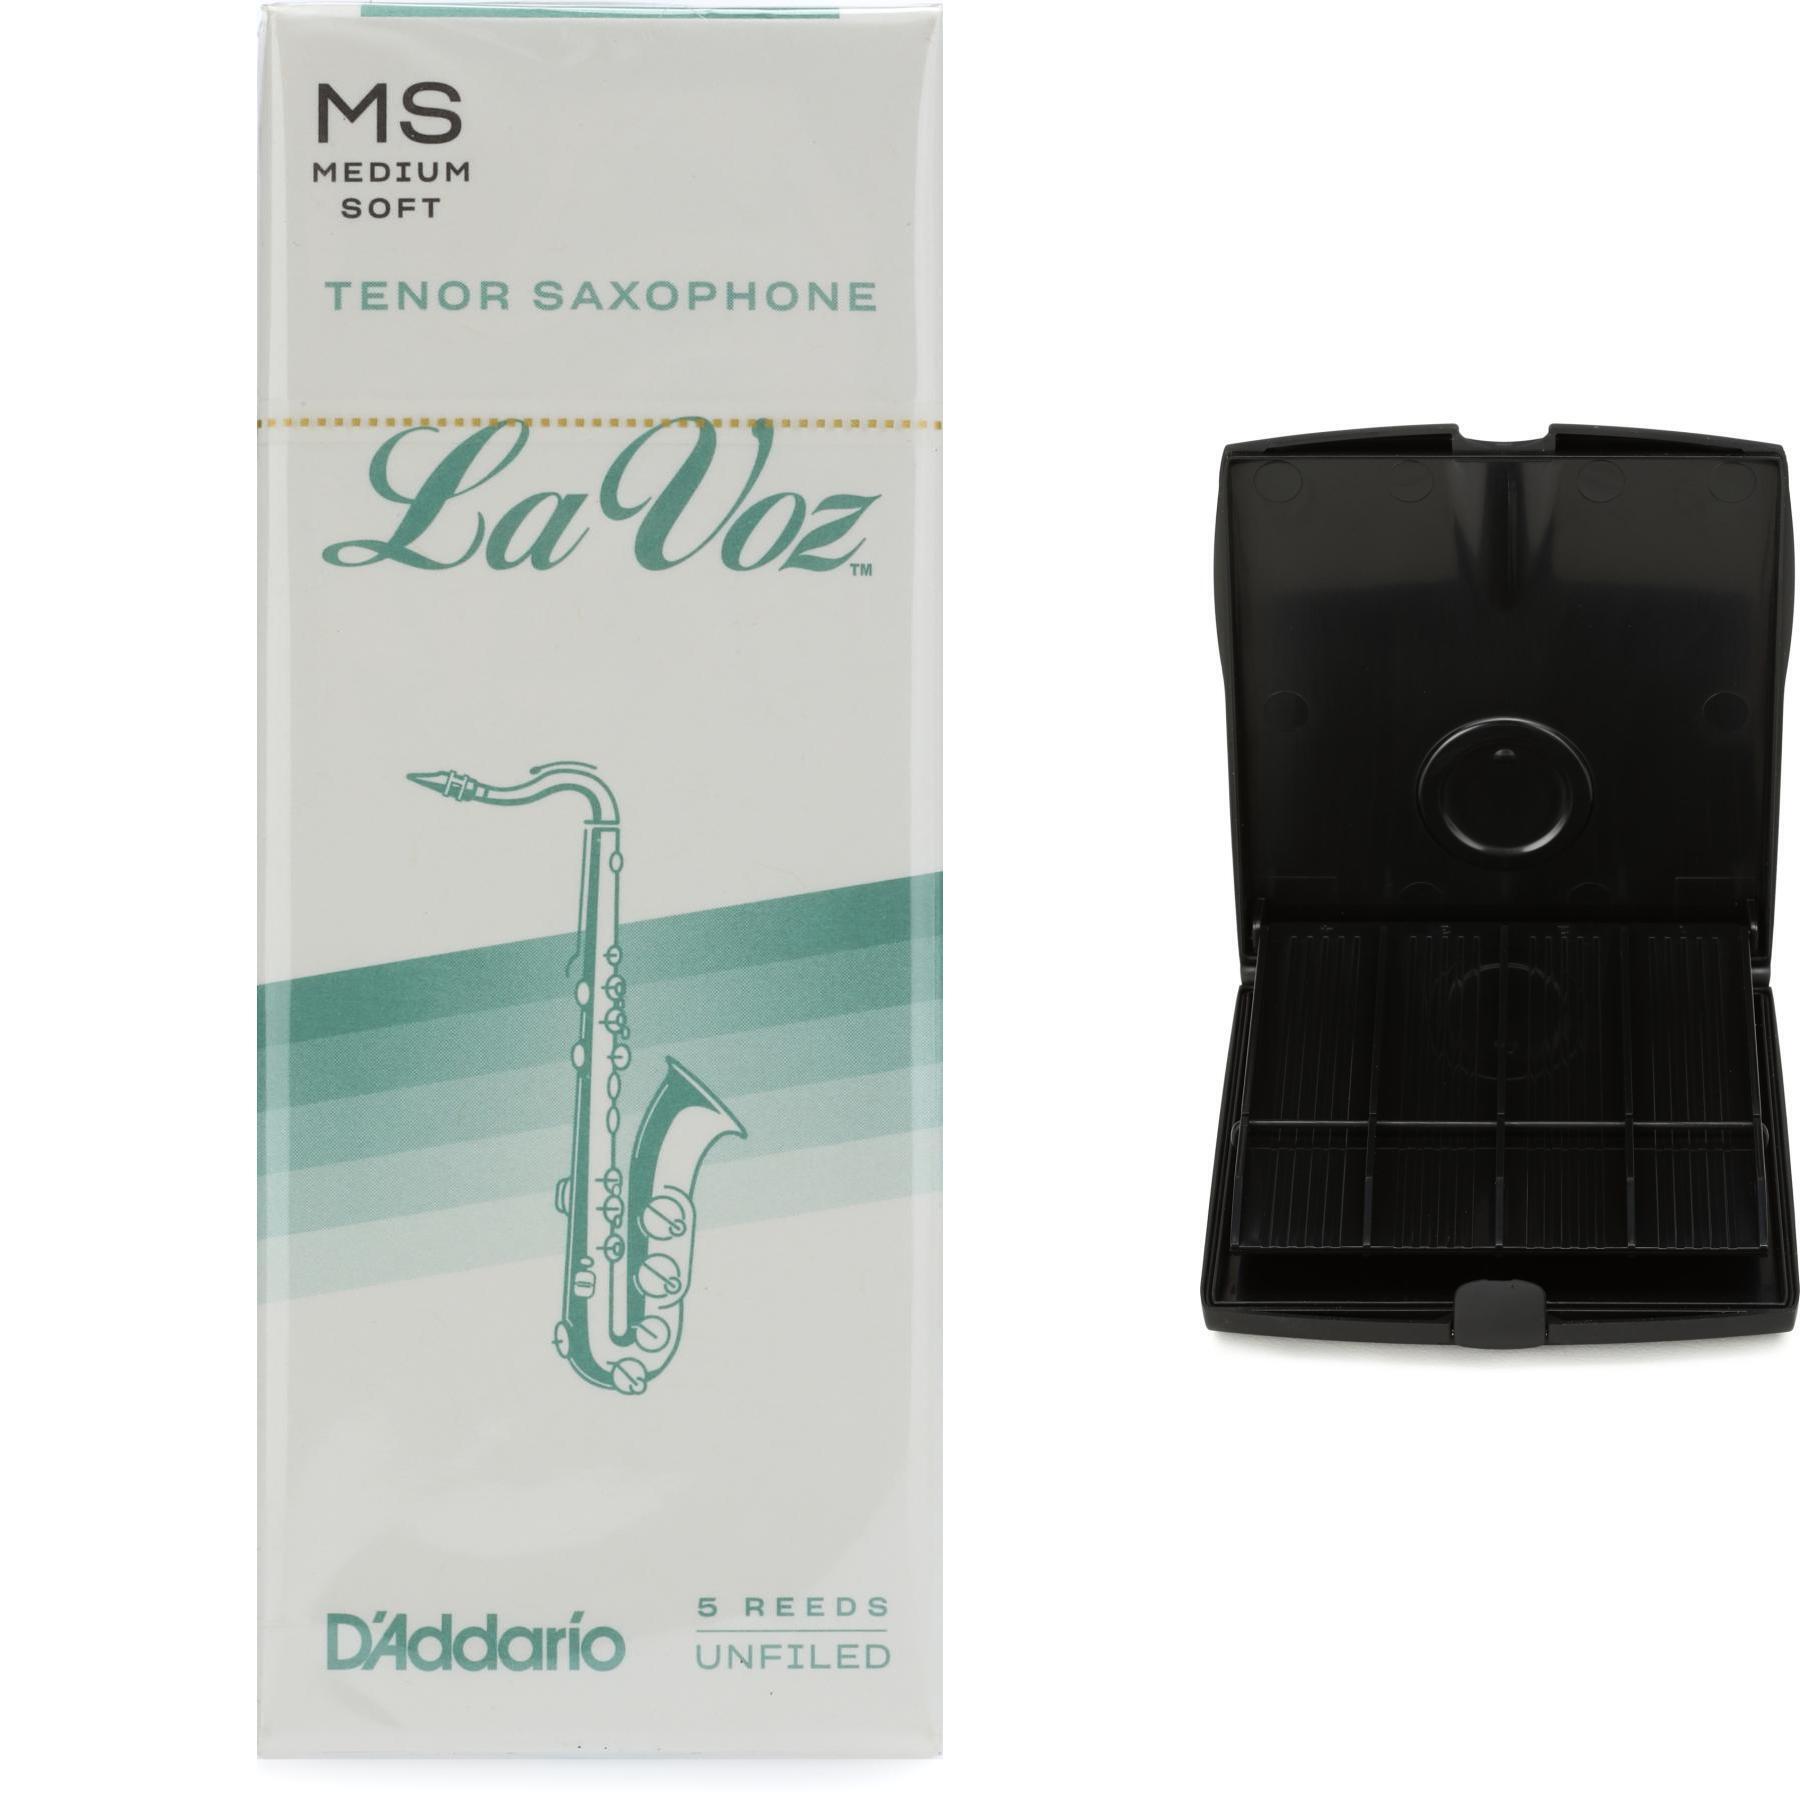 D'Addario La Voz Tenor Saxophone Reeds (5-pack) with Reed Vitalizer Case -  Medium Soft